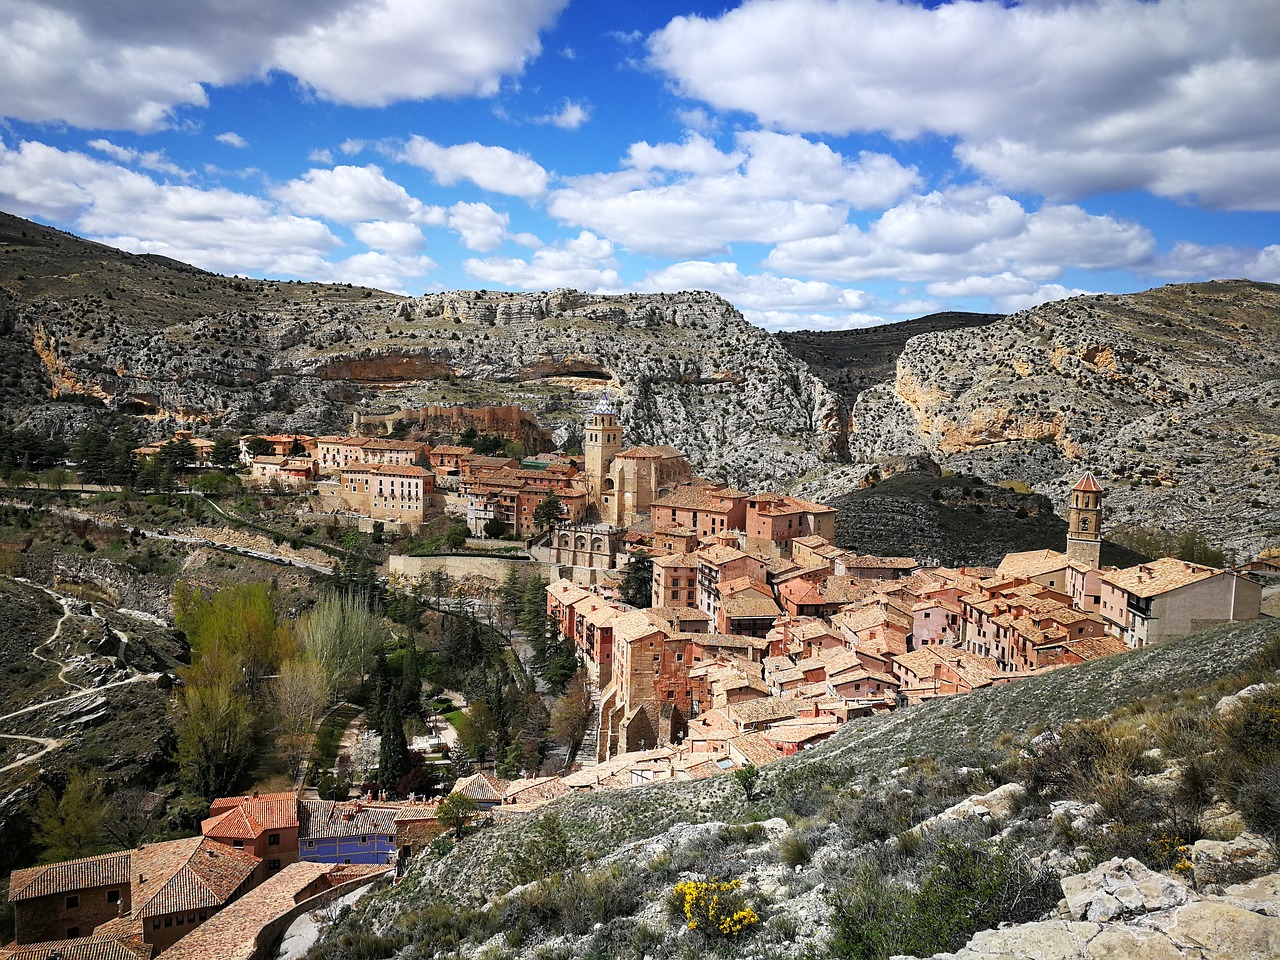 Albarracín Teruel España - Foto gratis en Pixabay - Pixabay